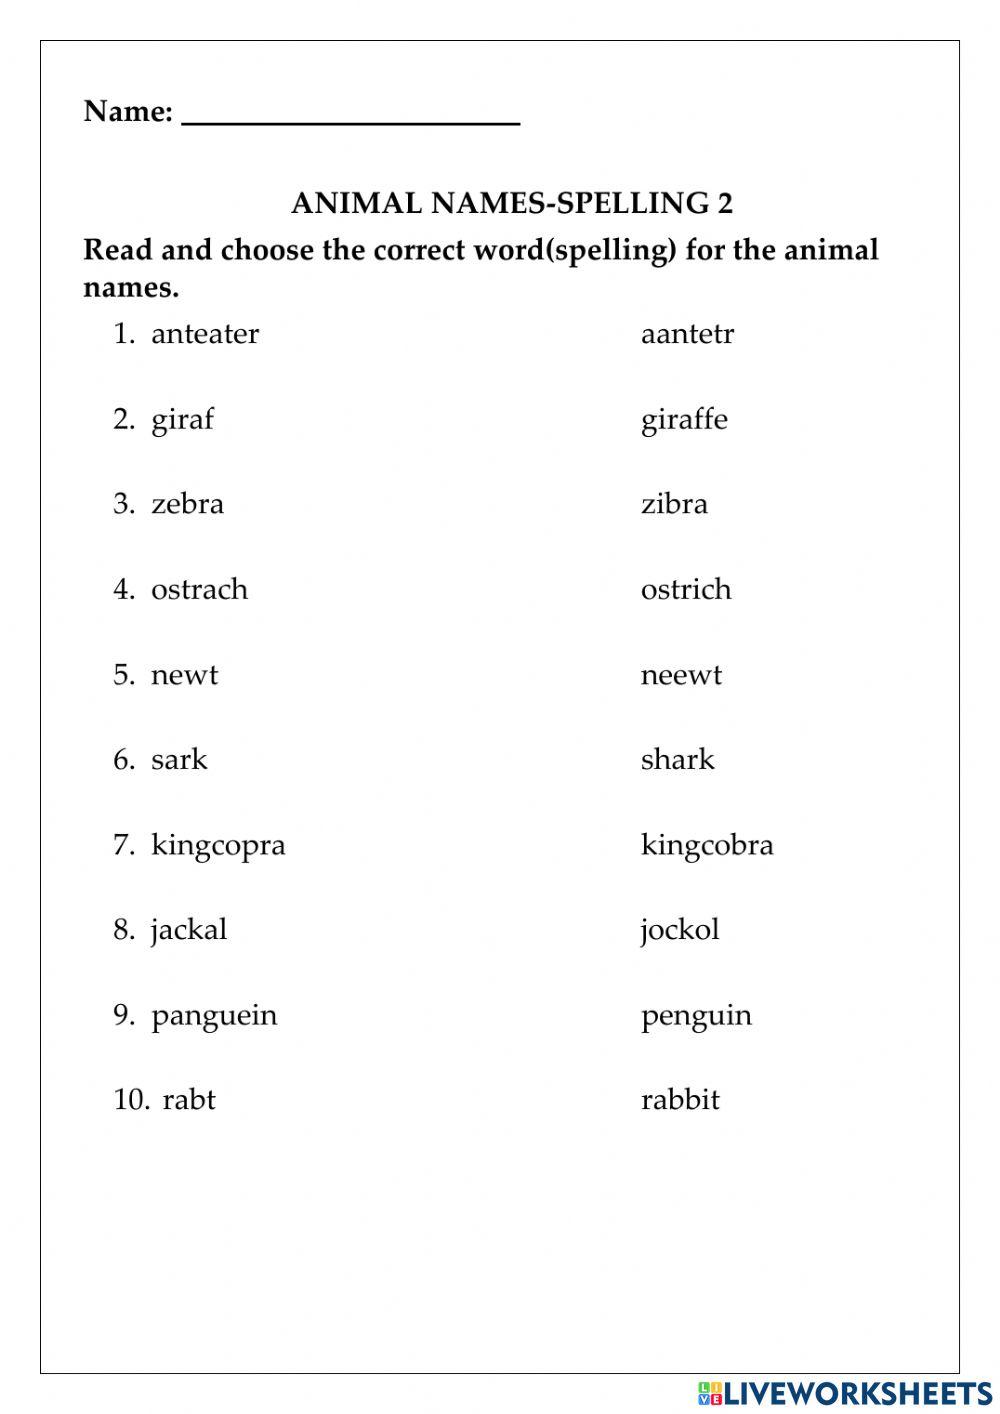 Animal Names-Spelling2